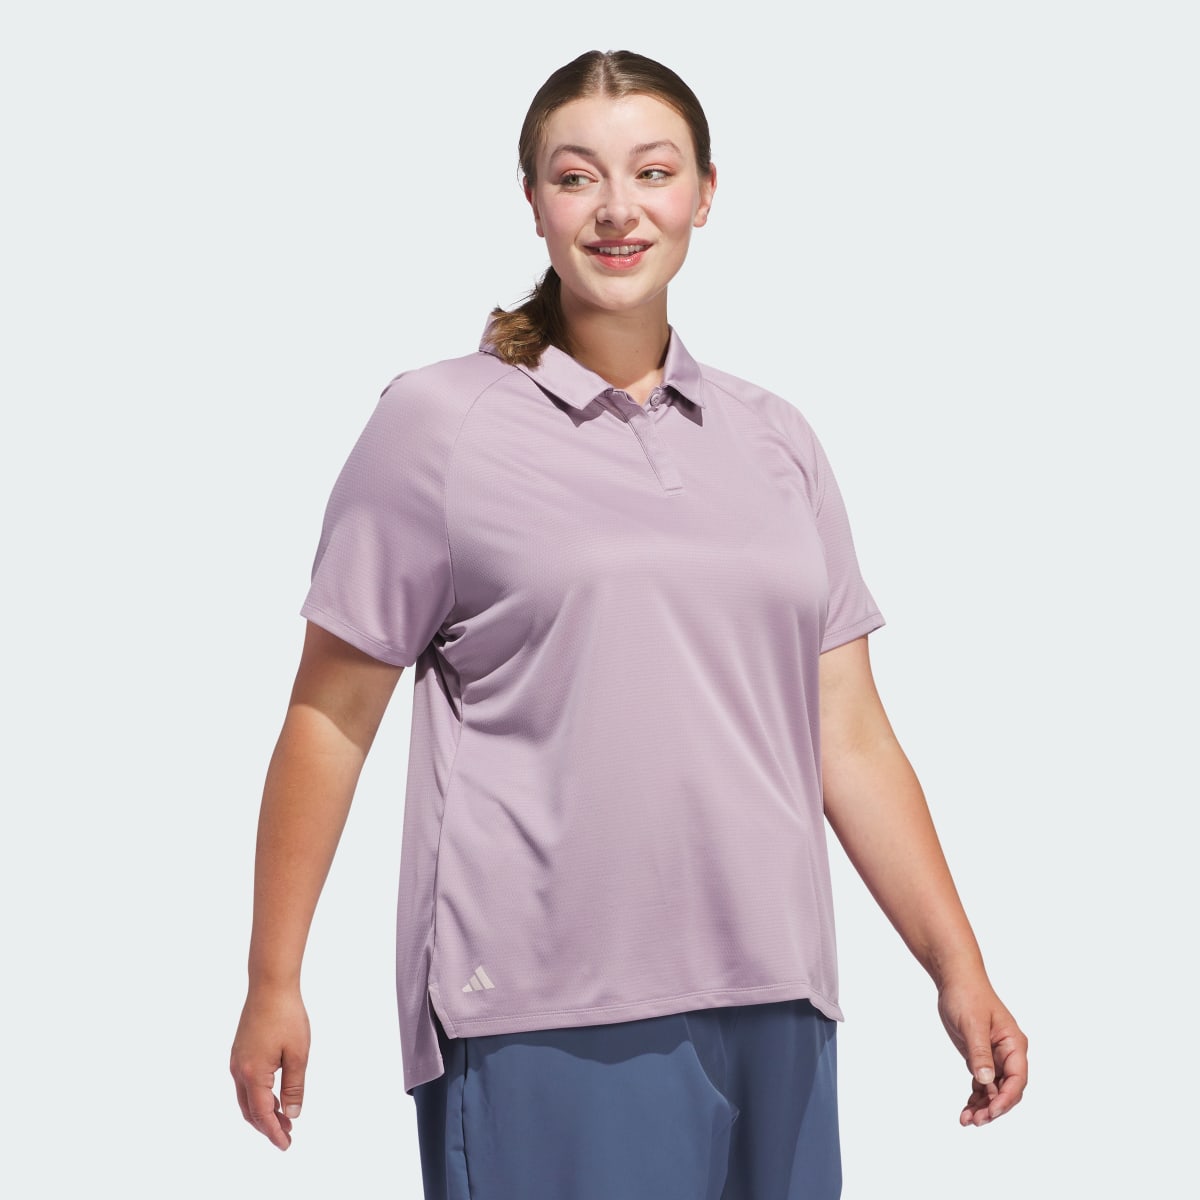 Adidas Women's Ultimate365 HEAT.RDY Polo Shirt (Plus Size). 4